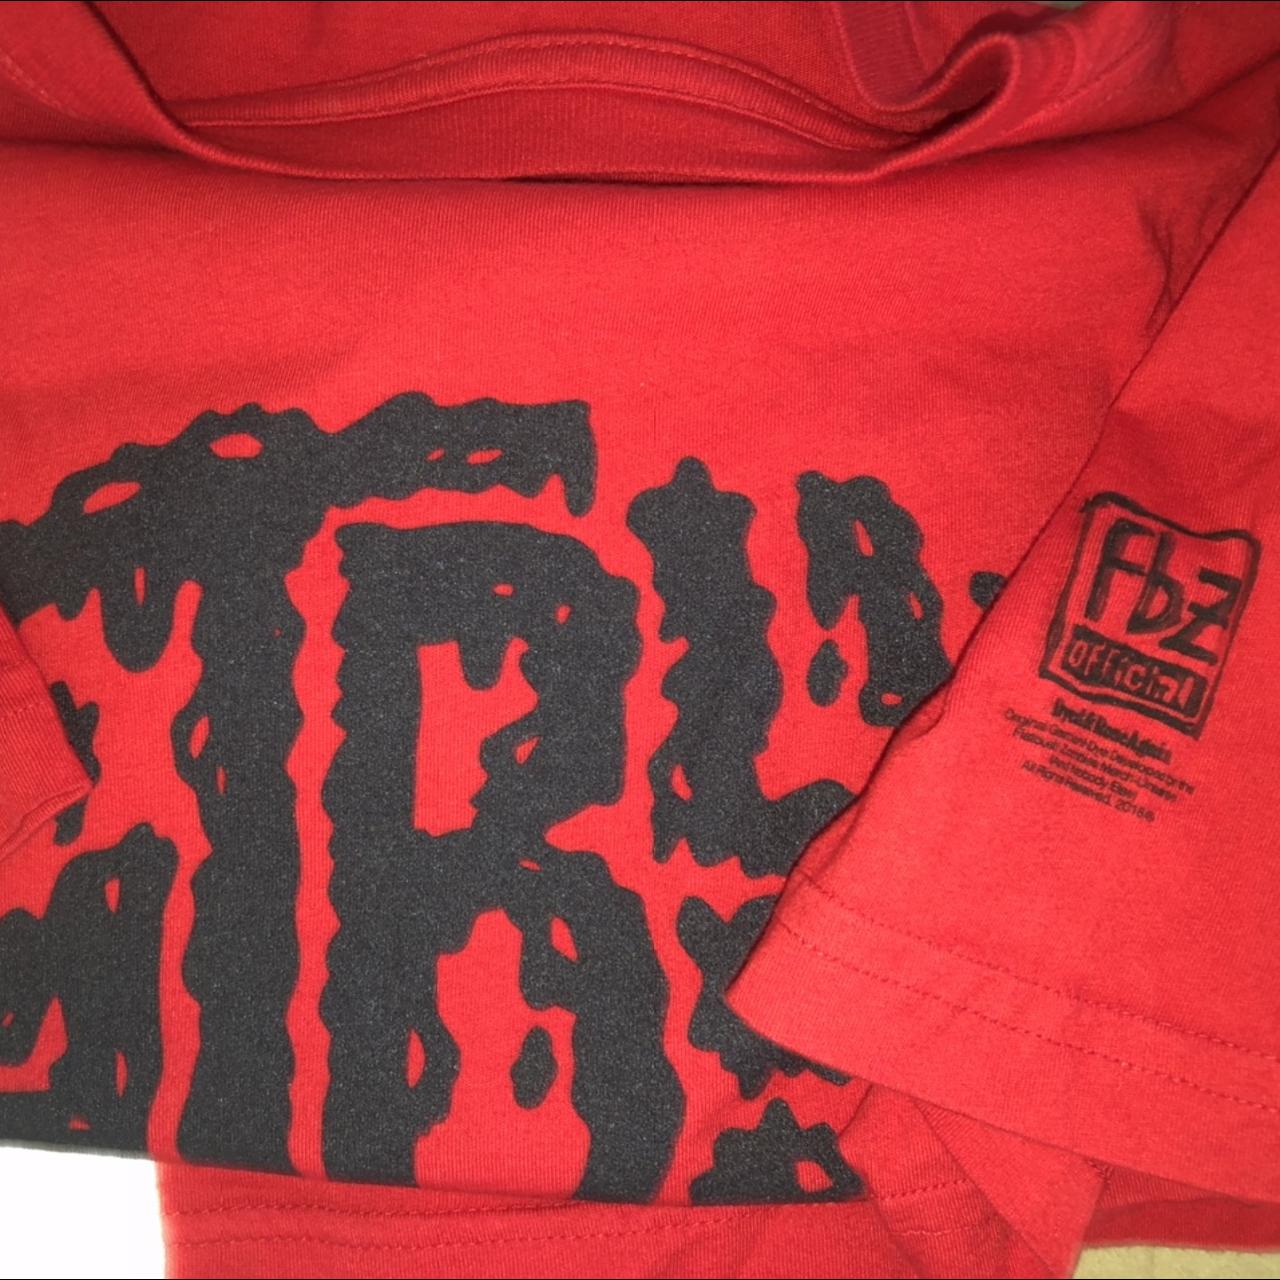 Dynasty Men's T-Shirt - Red - L